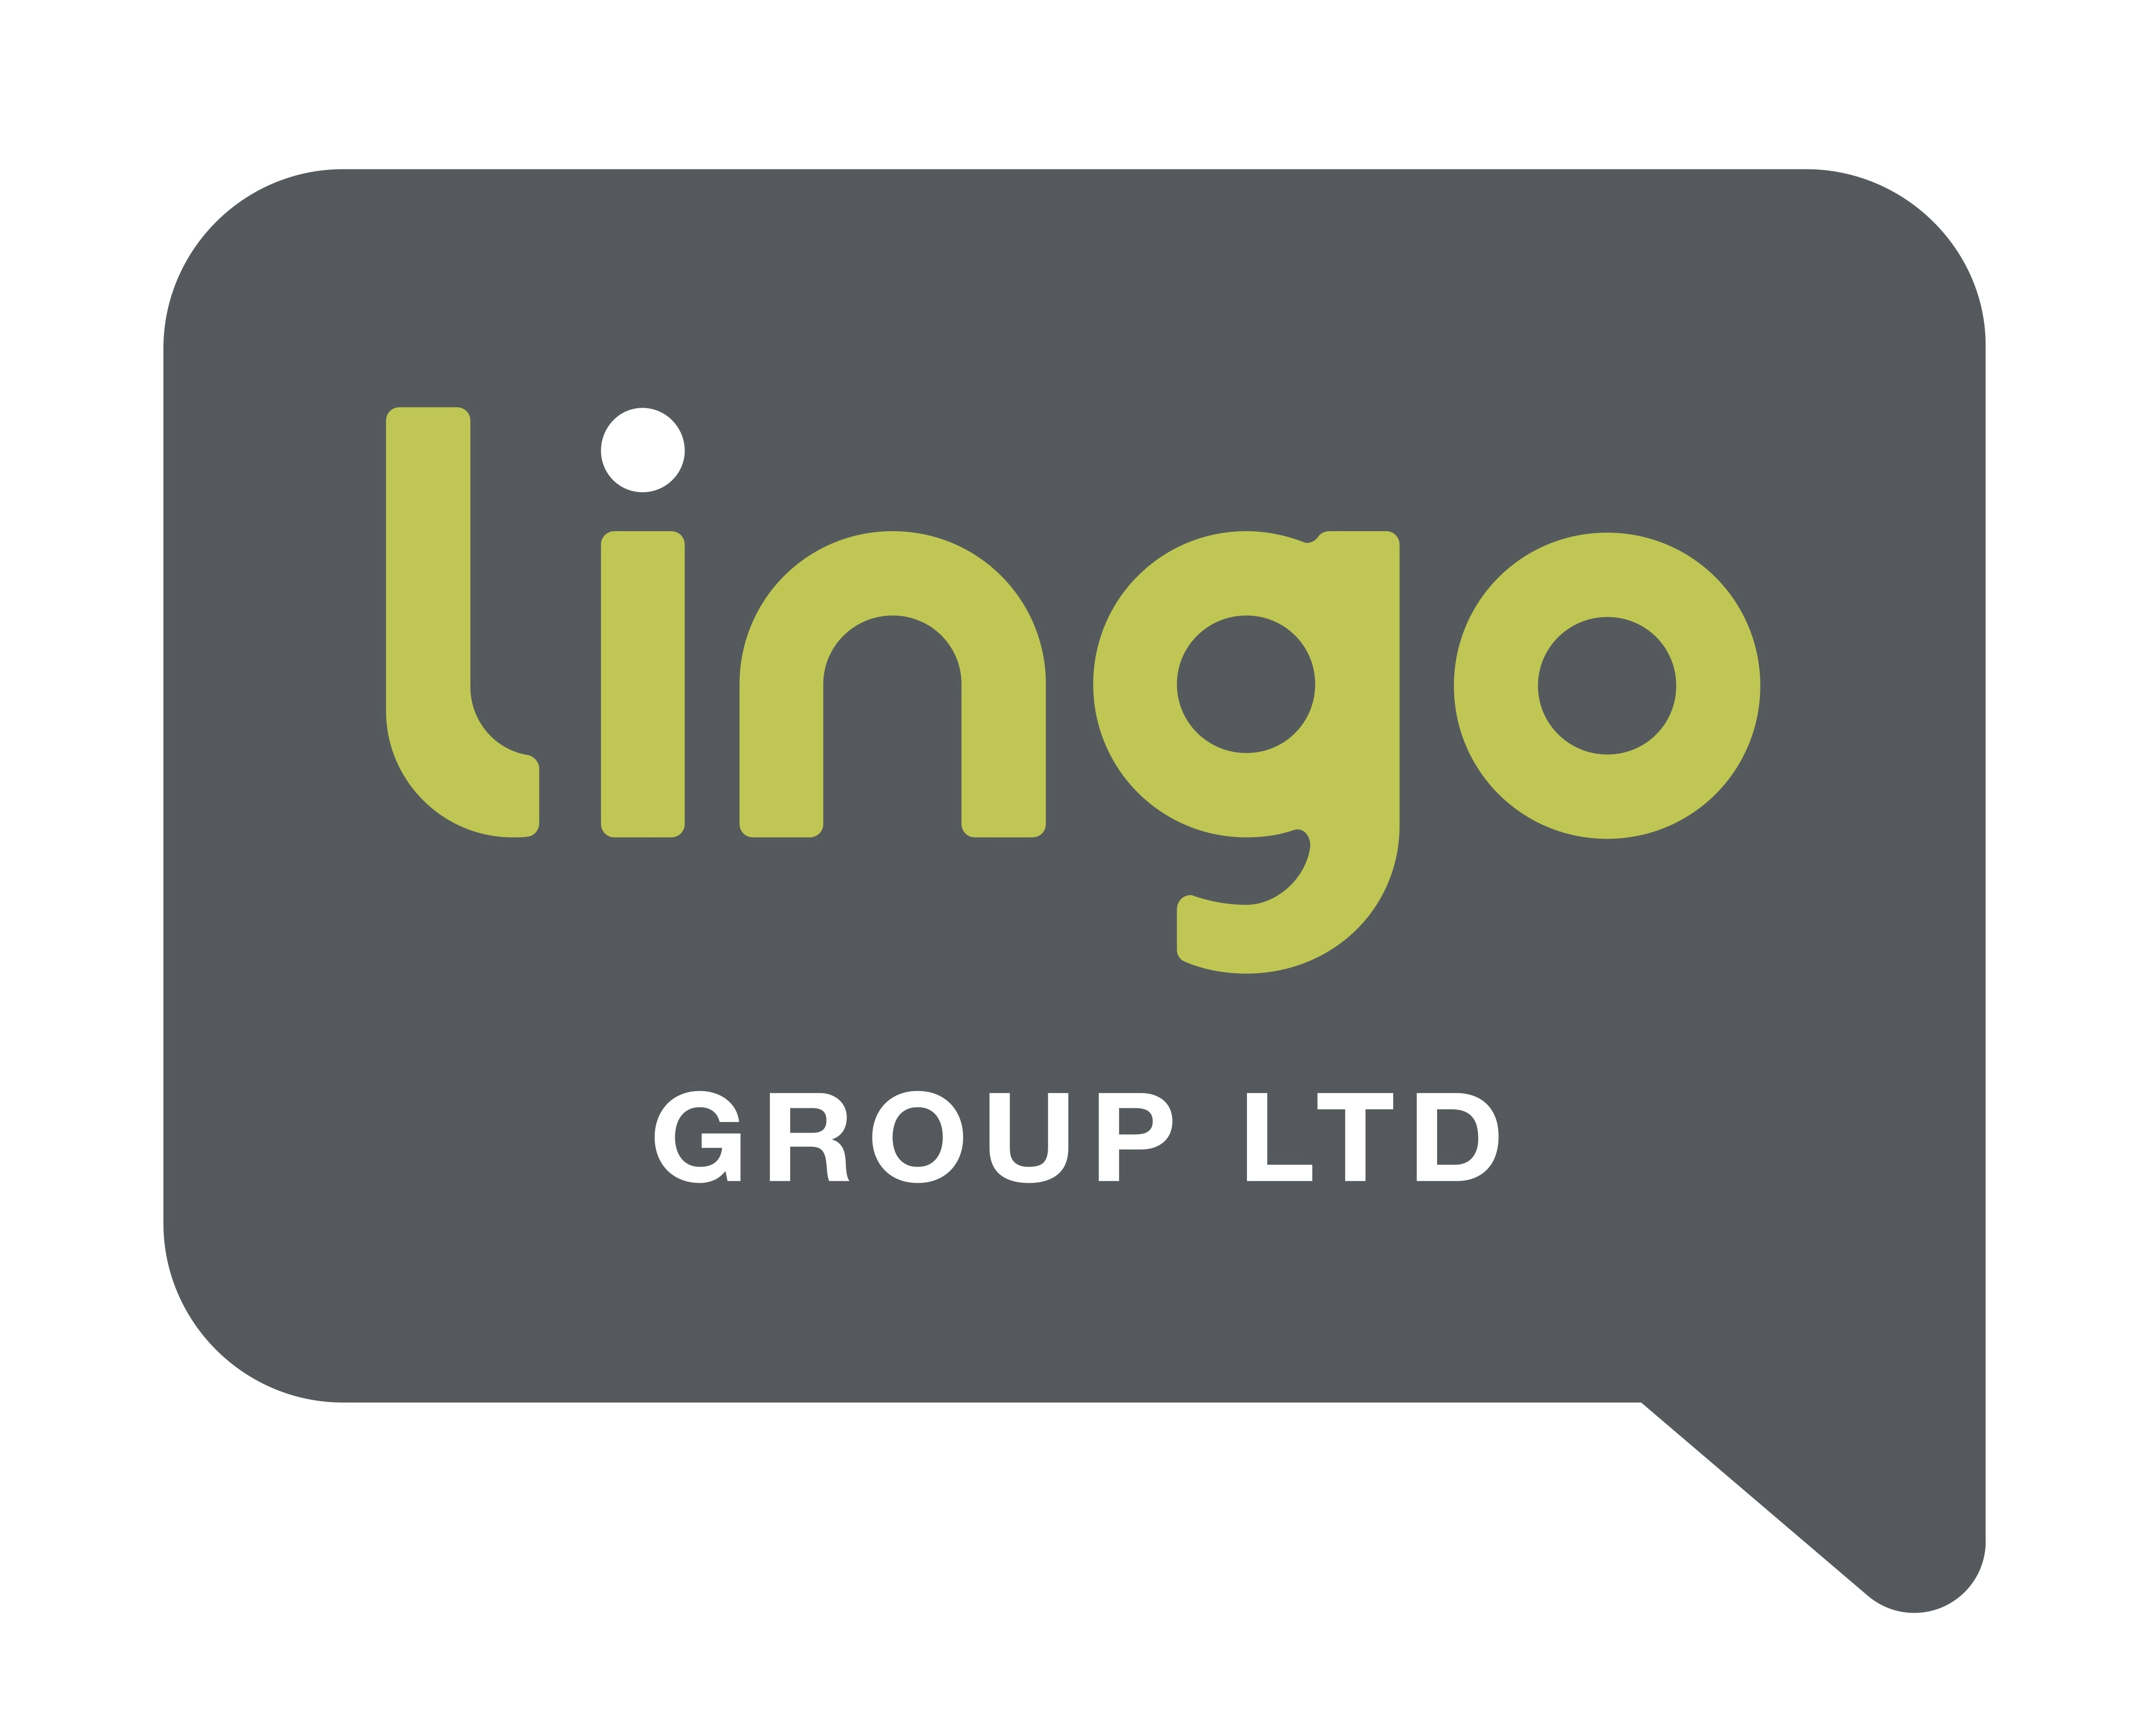 Lingo Group LTD.jpg